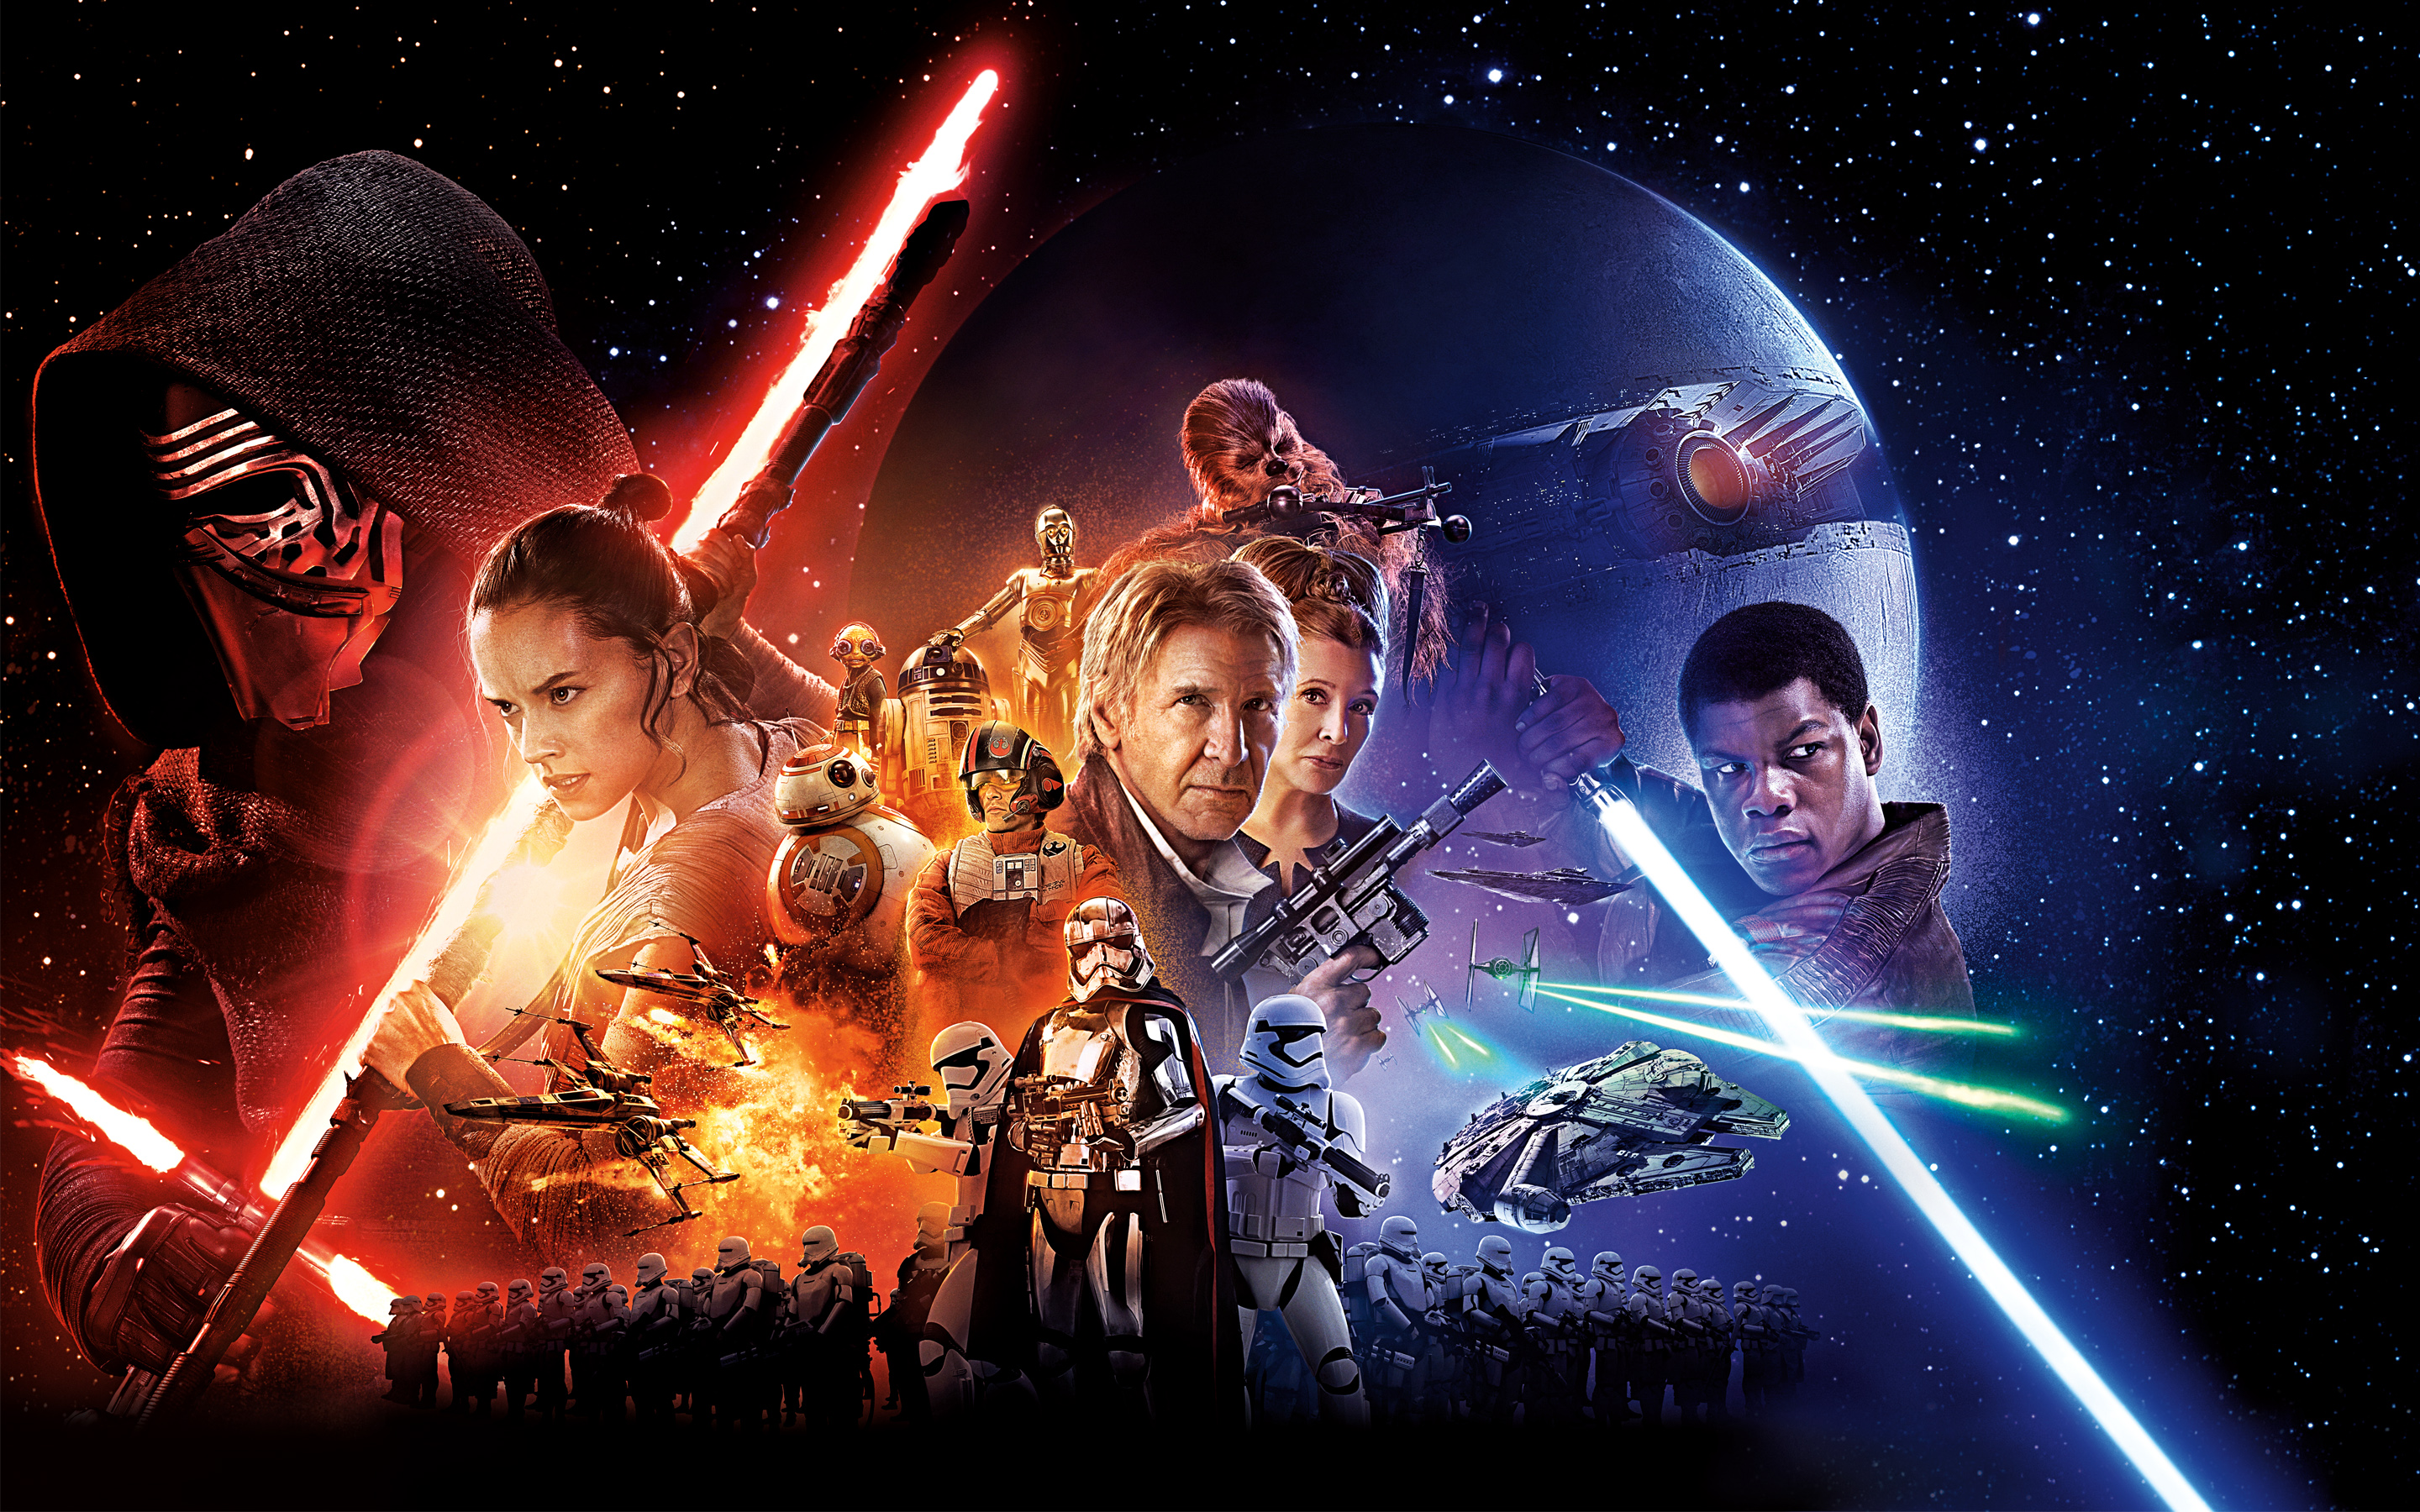 Star Wars Episode Vii The Force Awakens Movie